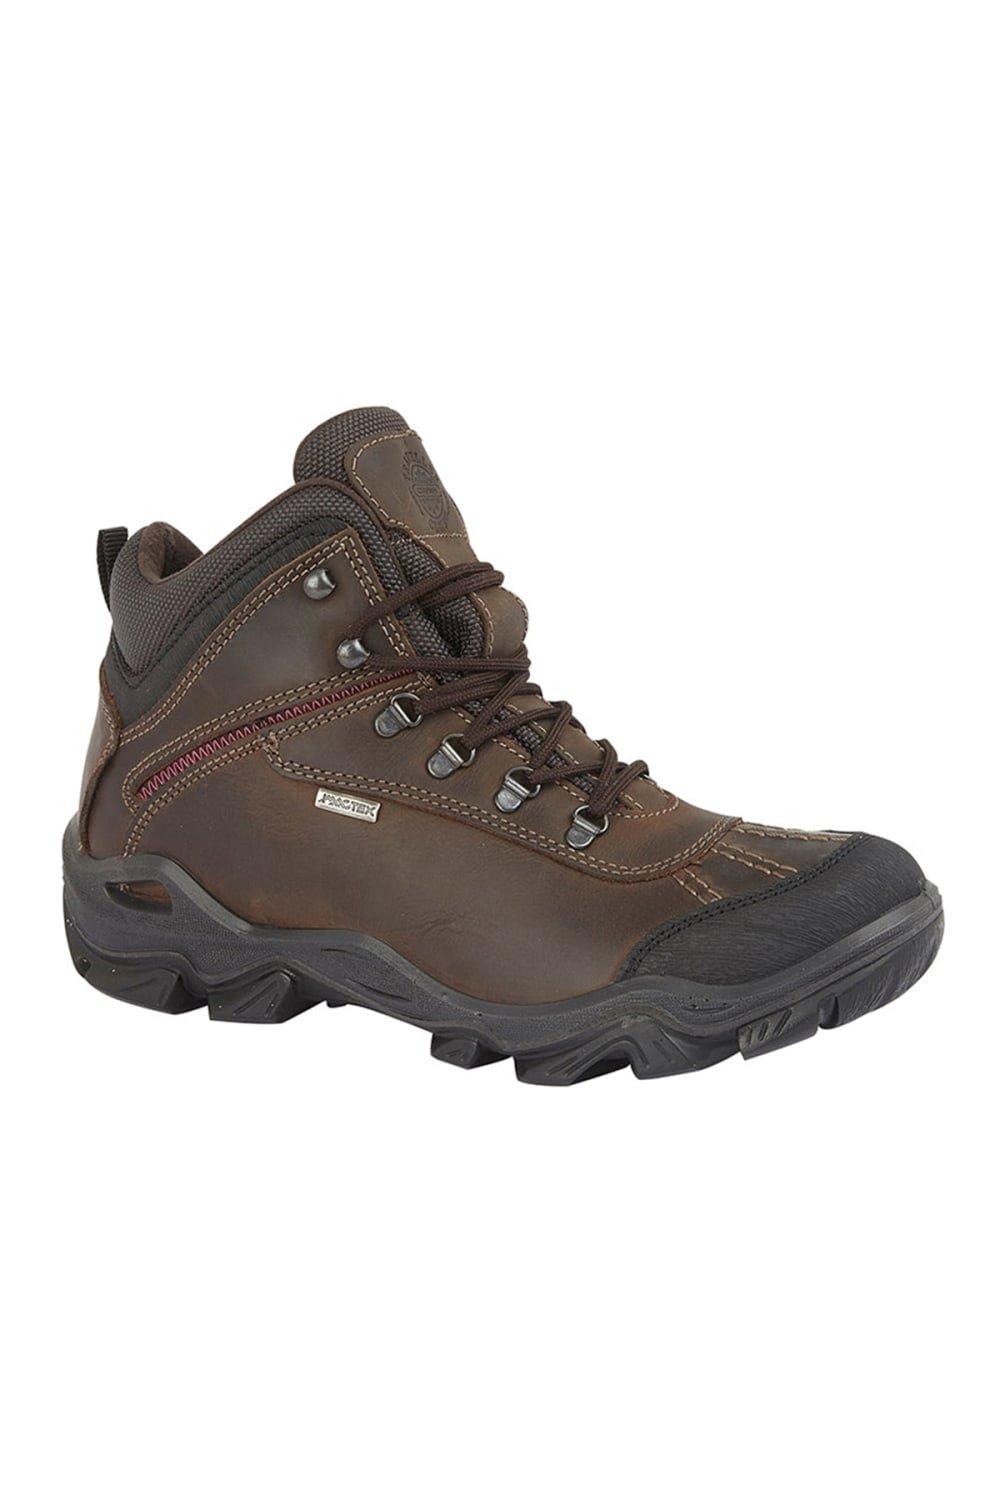 Grisport Mens Saracen Waterproof Hiking Boots (Brown)